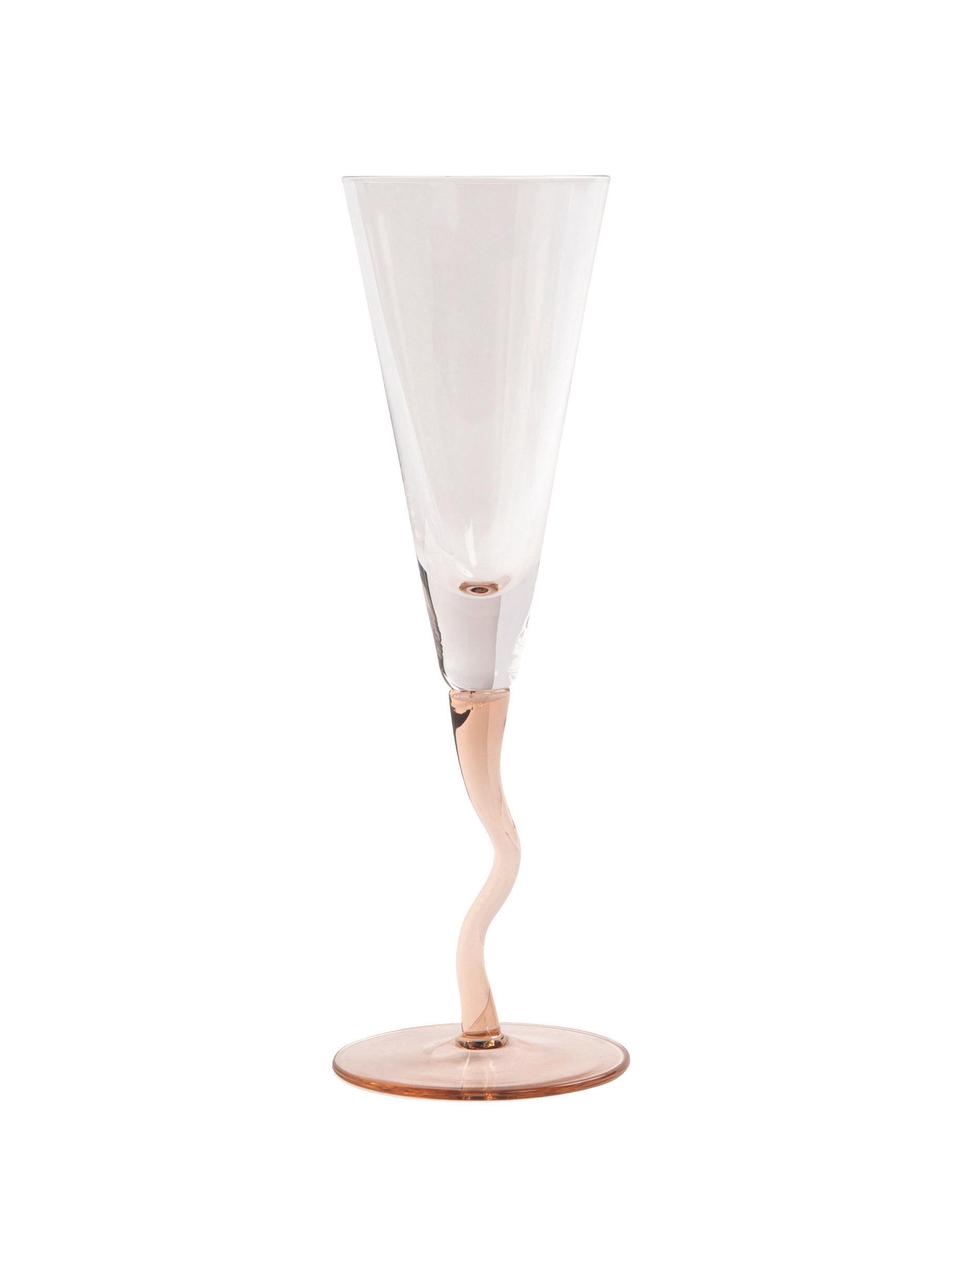 Kristallen champagneglazen Curly, 2 stuks, Glas, Roze, transaparant, Ø 7 x H 22 cm, 100 ml